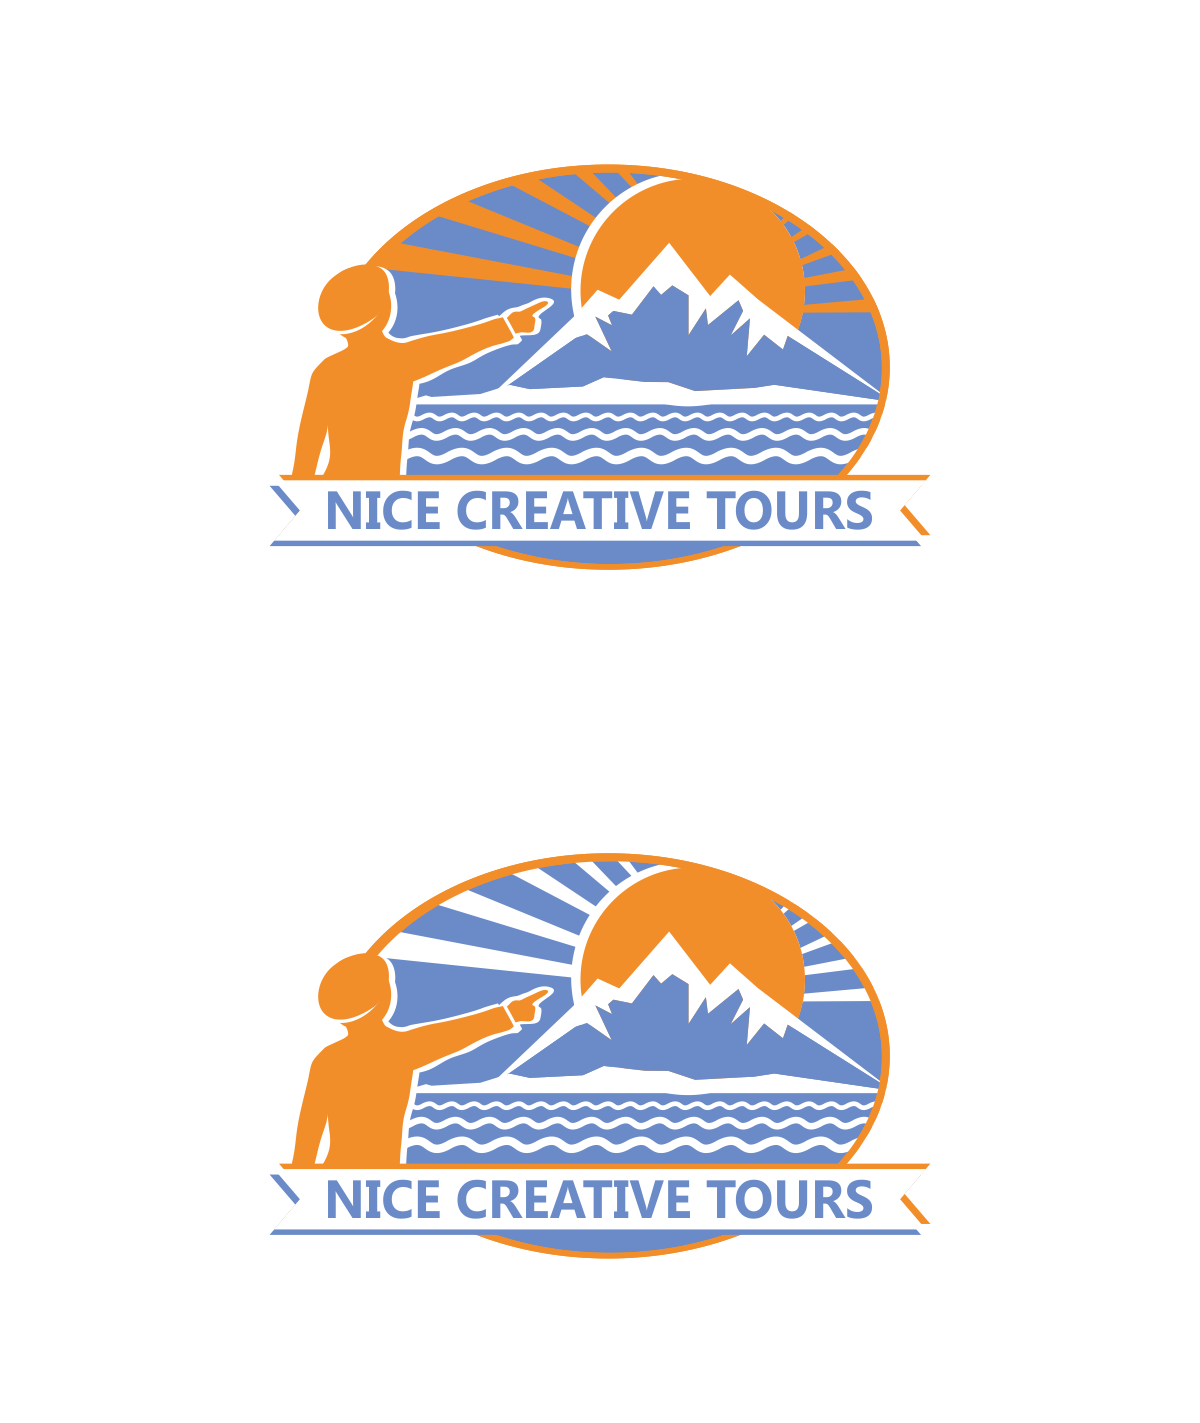 Nice_Creative_Tours1.png